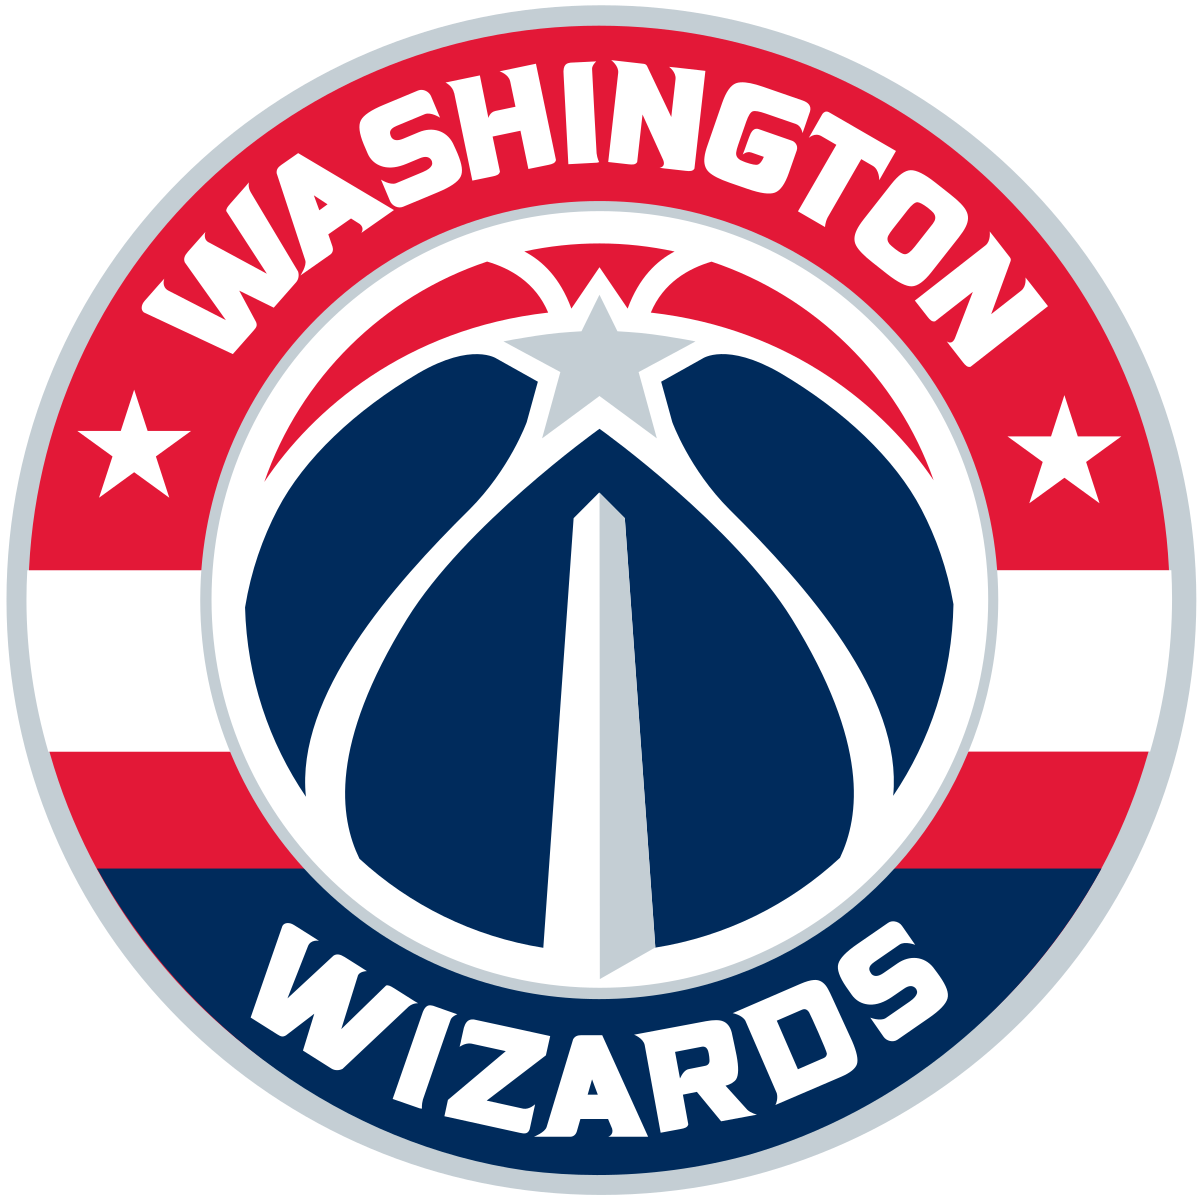 Washington Wizards (Sports Team)